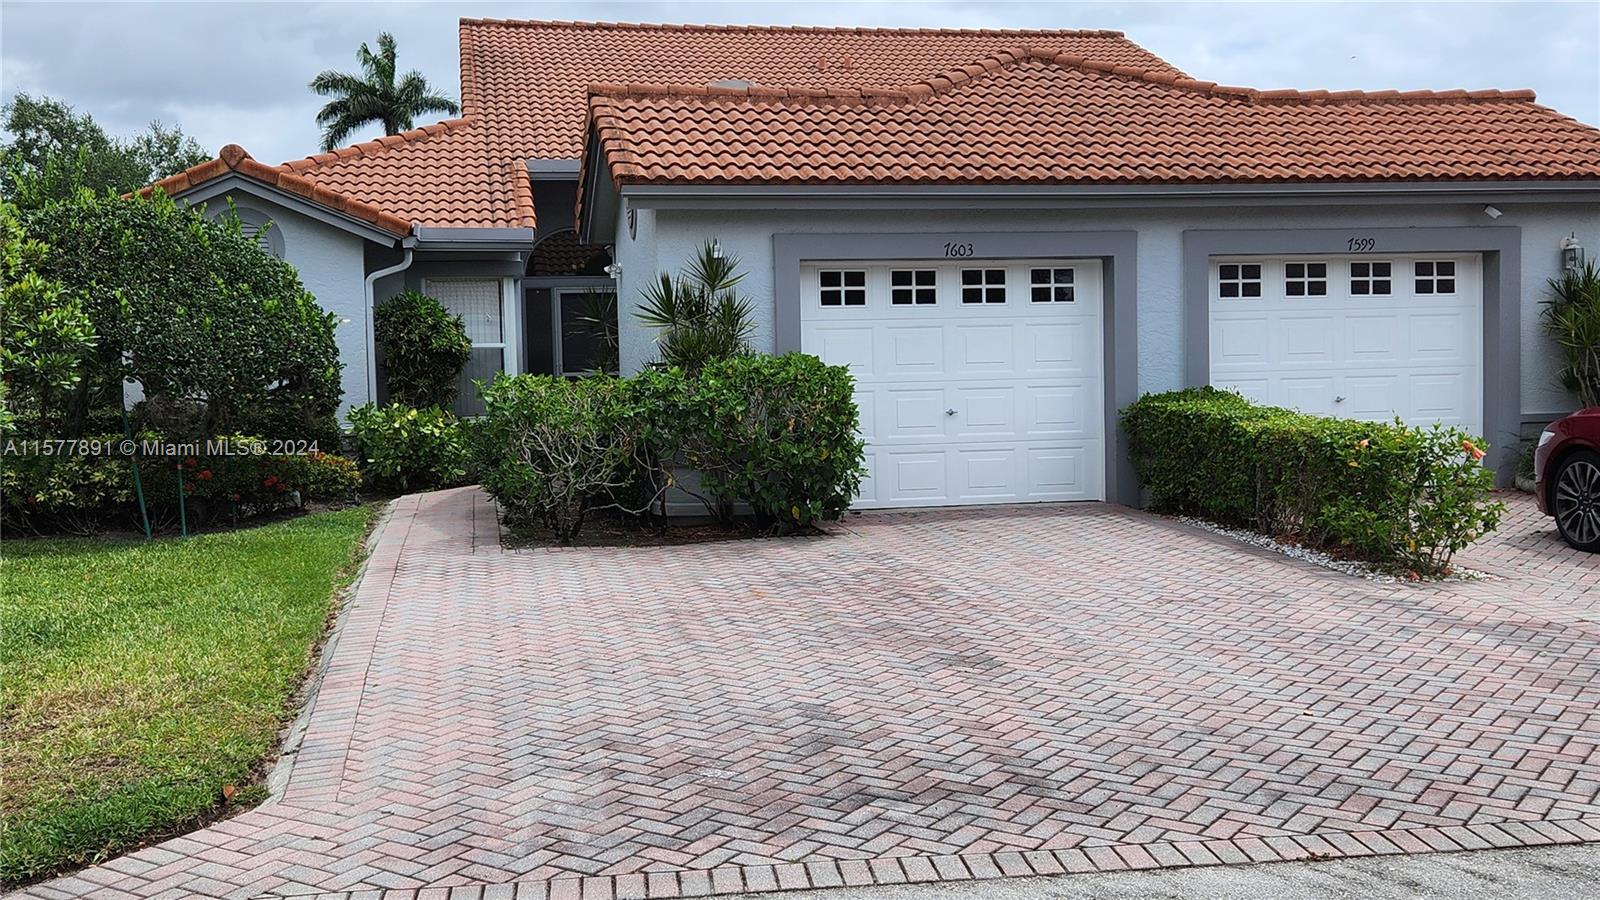 Property for Sale at 7603 Seafoam Ct Ct A, Boynton Beach, Palm Beach County, Florida - Bedrooms: 2 
Bathrooms: 2  - $385,000